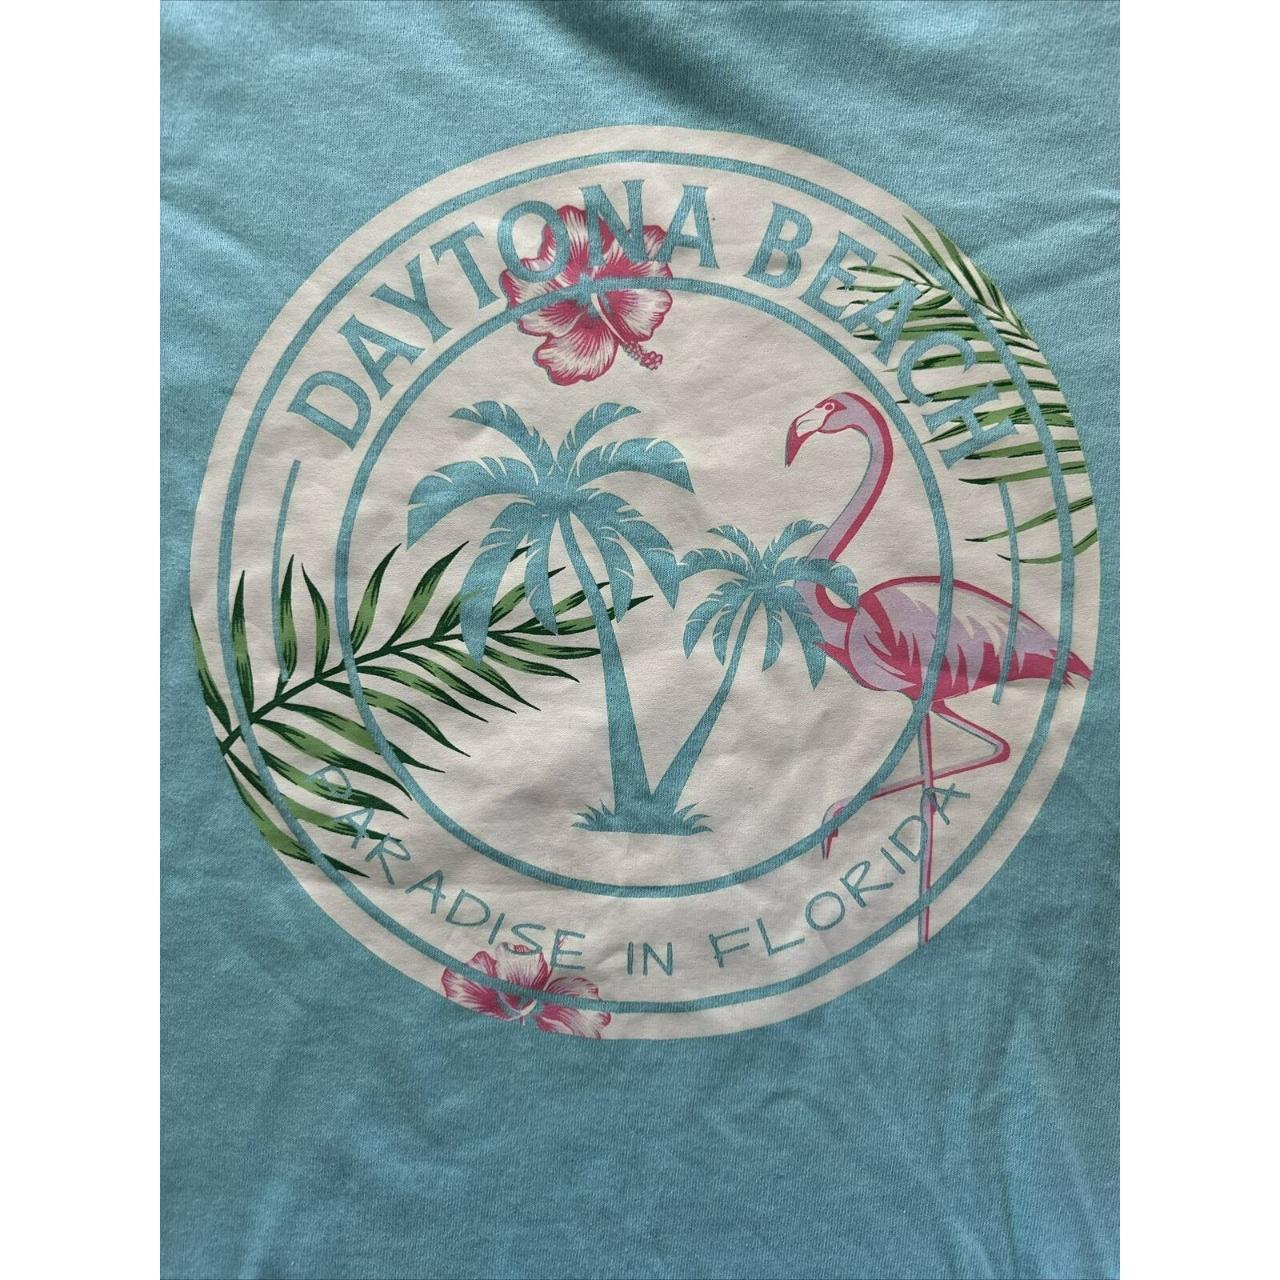 Daytona Beach Florida T Shirt Size XL. - Depop